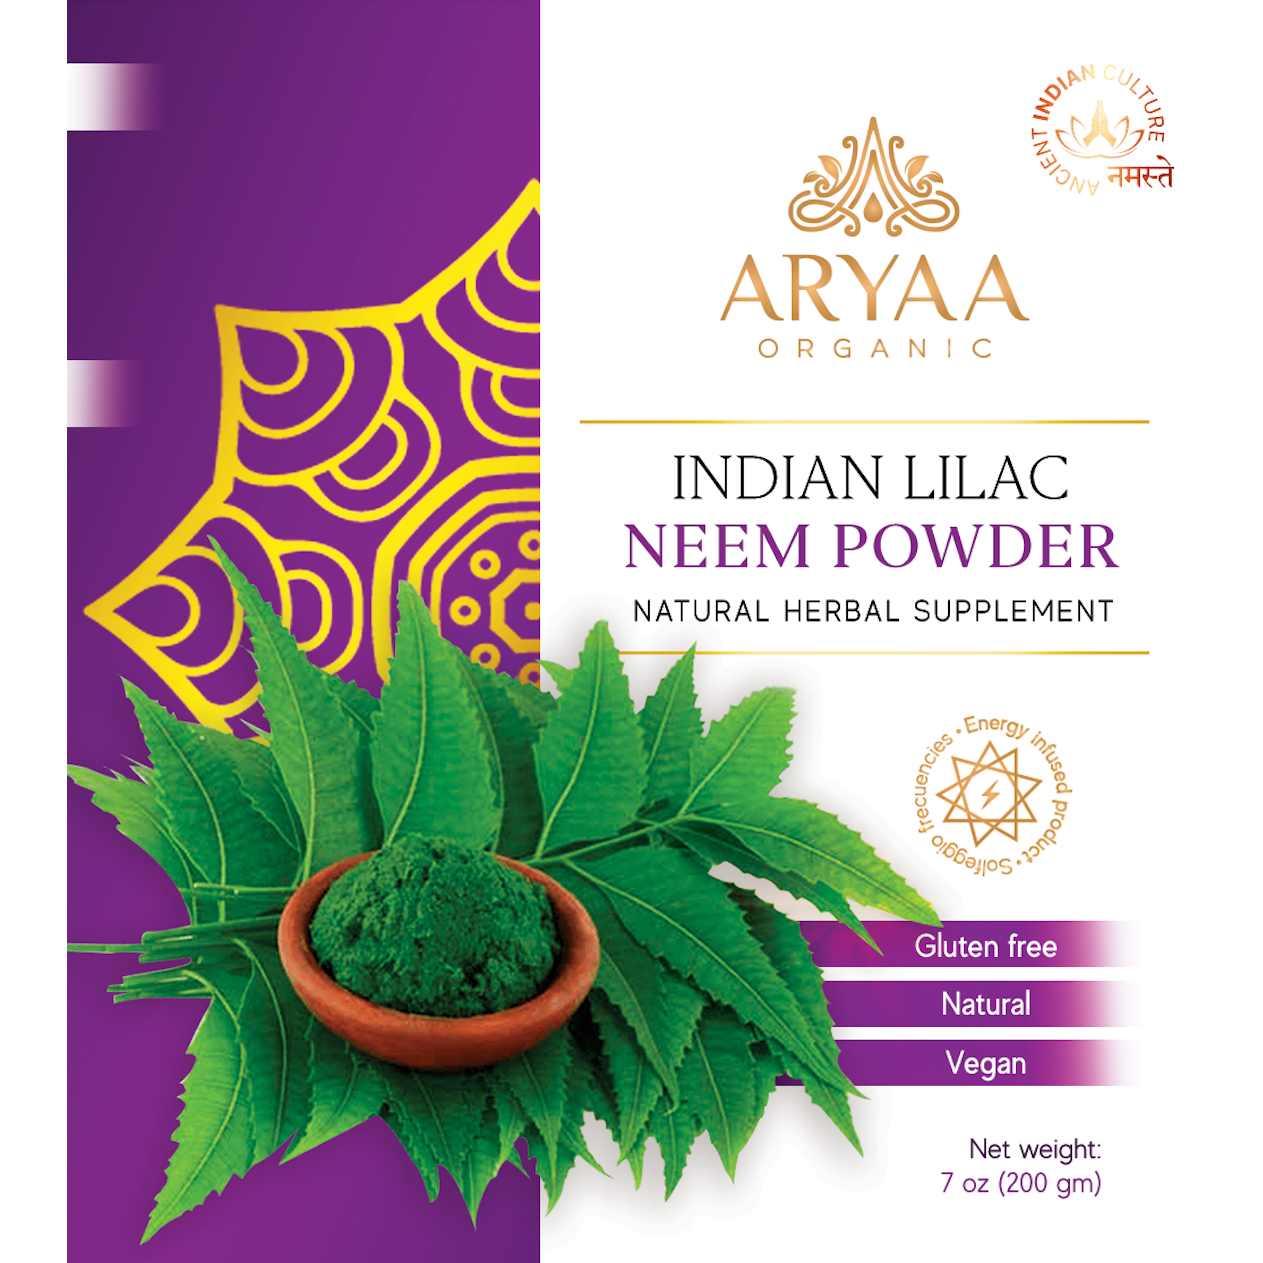 Aryaa Organic Neem Powder (Organic Indian Lilac)